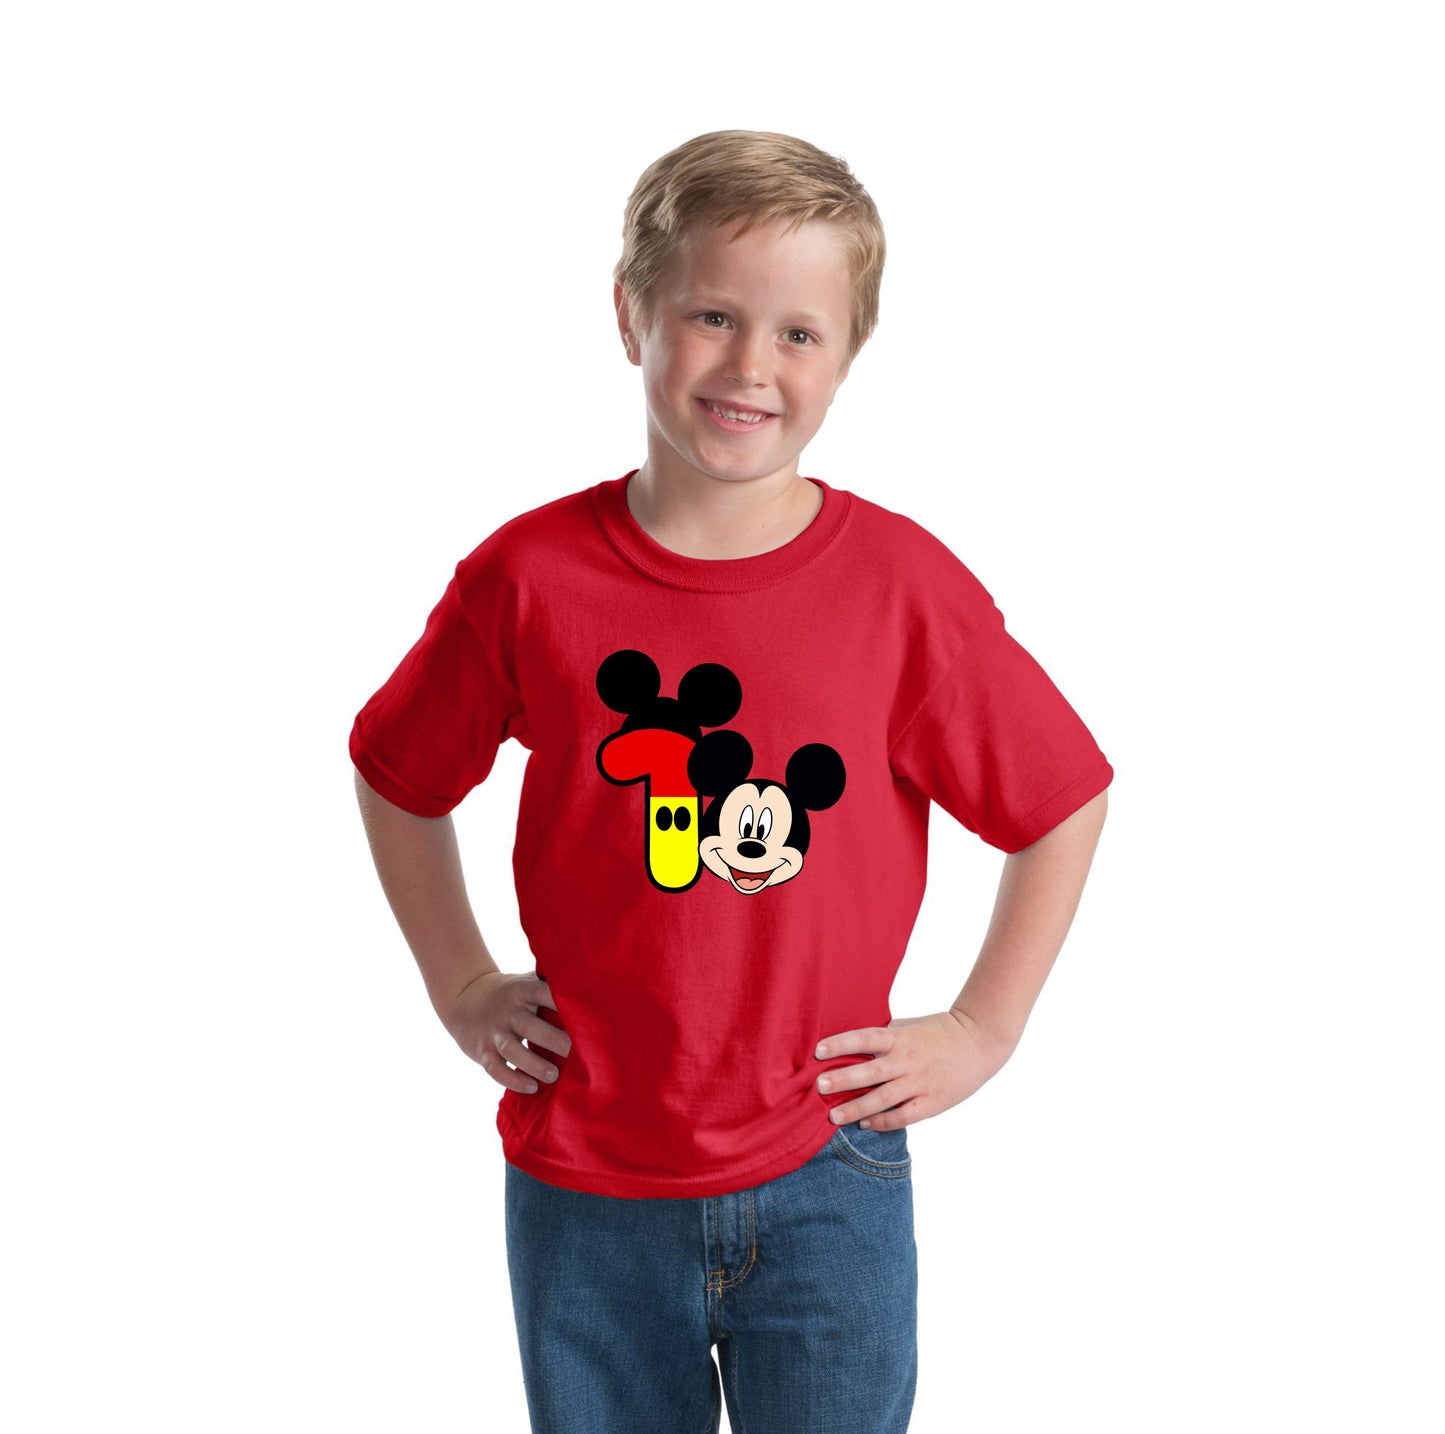 Custom Birthday Family Set Shirt - Mickey Mouse - MYSTYLEMYCLOTHING